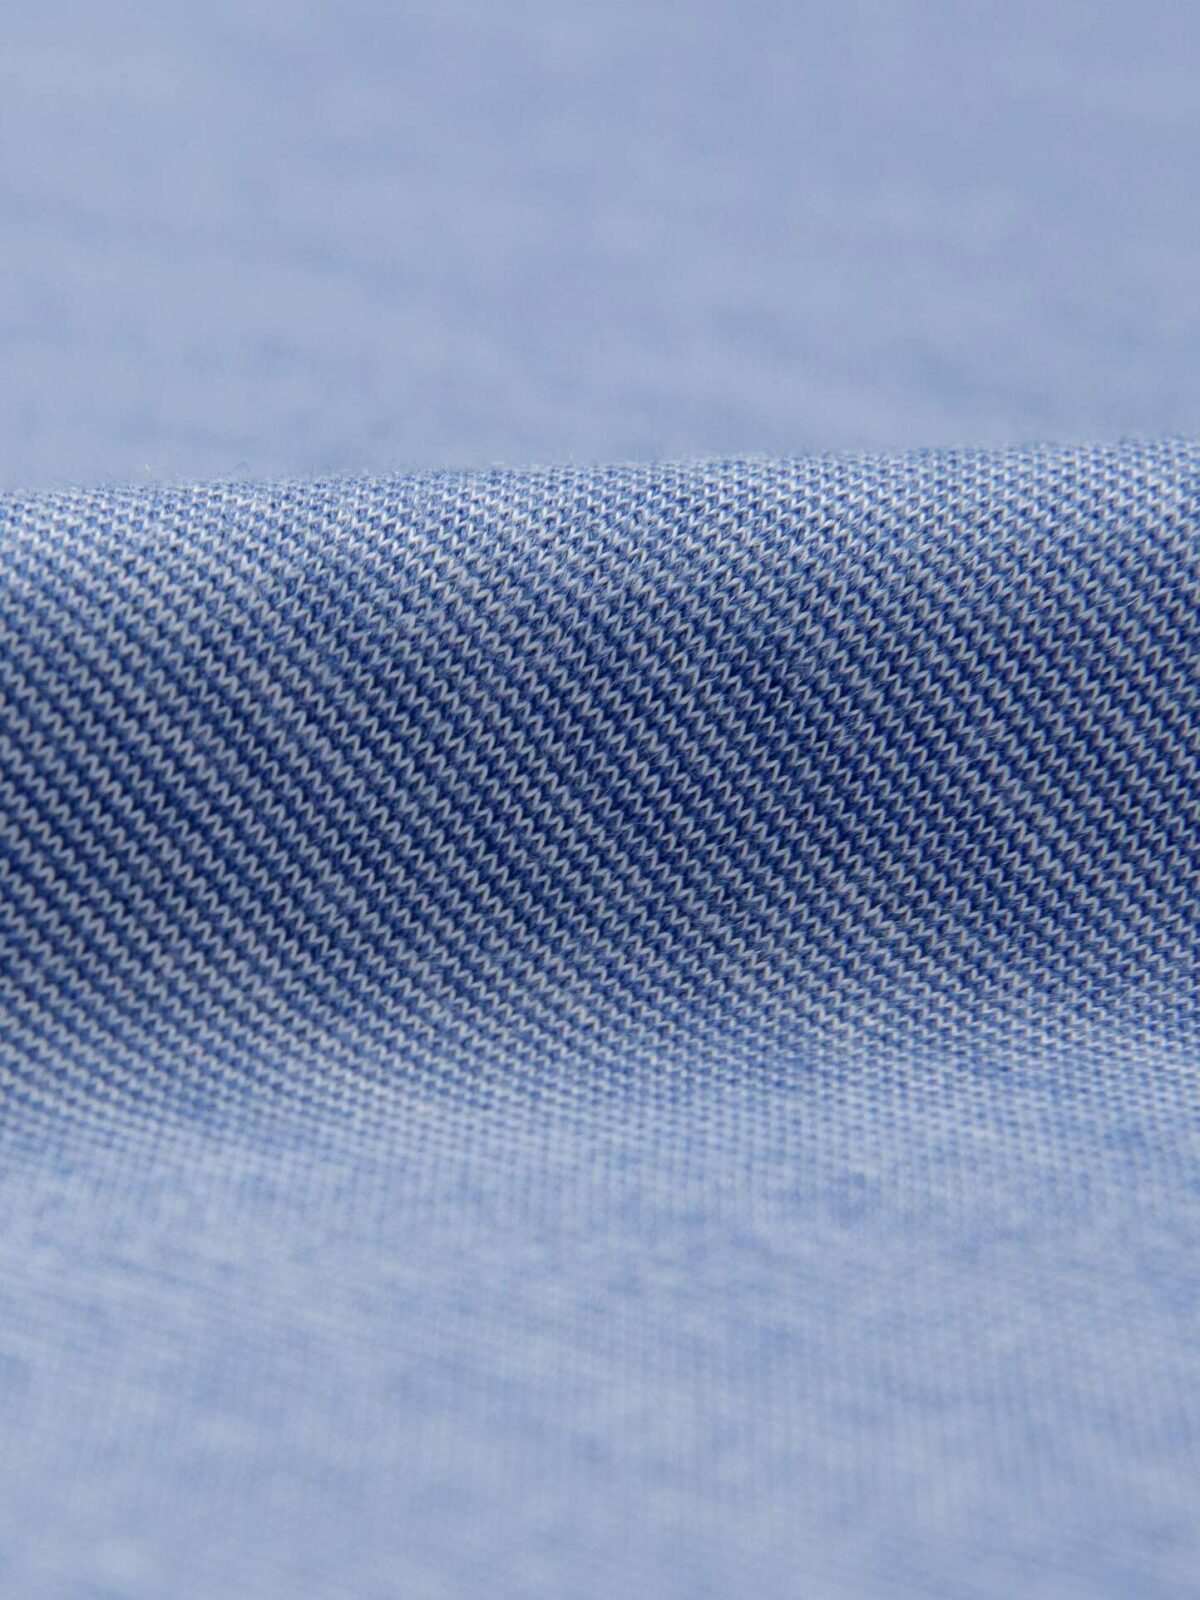 Pinehurst Blue Melange Cotton and Tencel Jersey Shirts by Proper Cloth